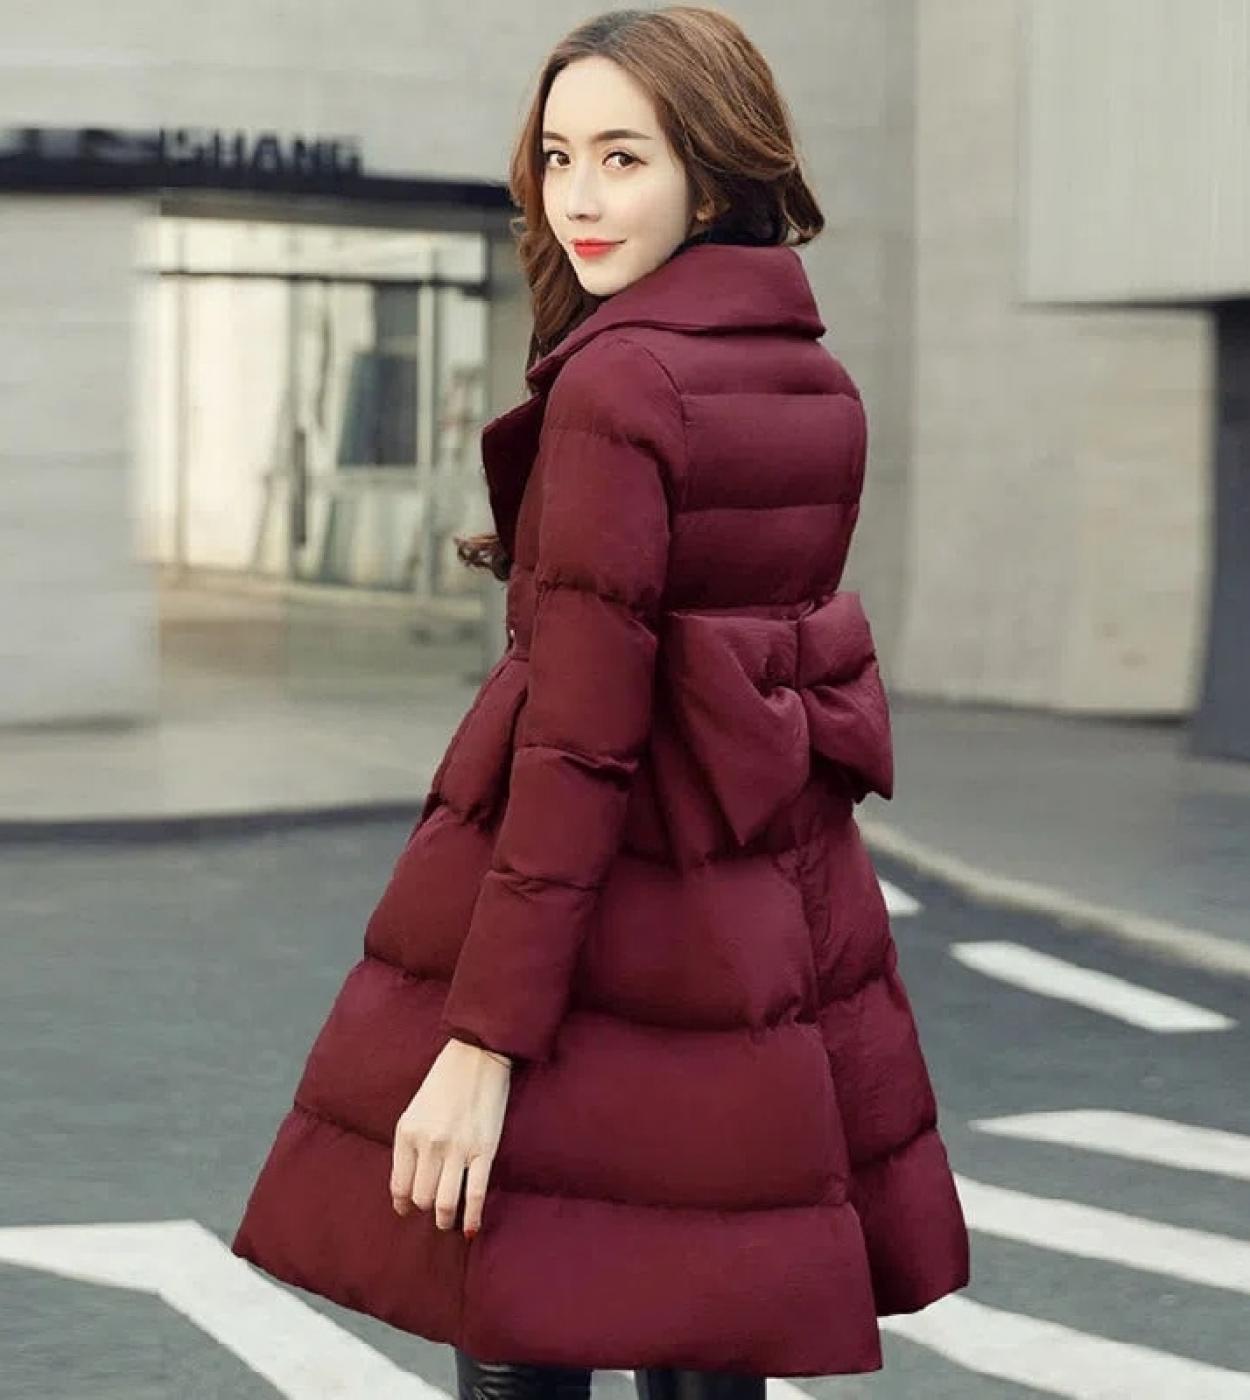 2022 New Fashion Winter Jacket Women Parka Warm Outwear Padded Cotton Jacket Coat Womens Clothing Parkas Manteau Femme